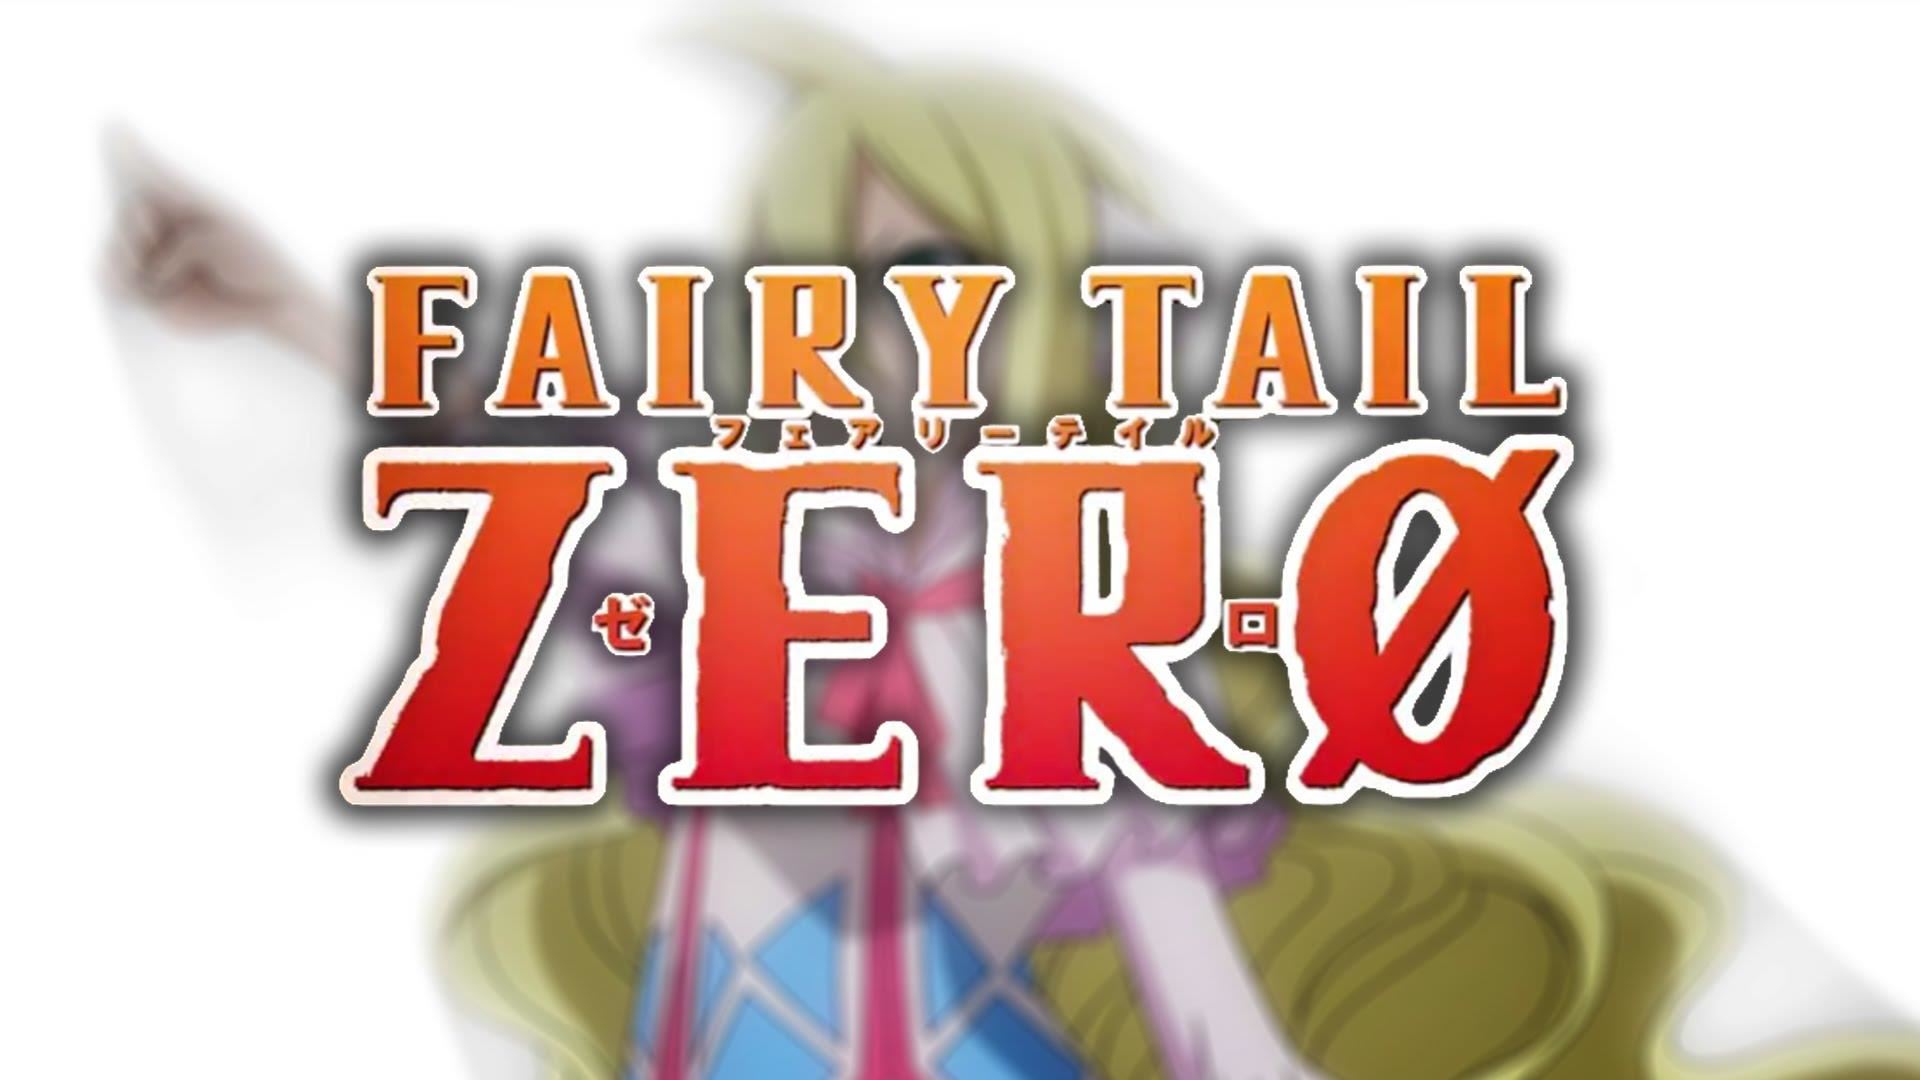 Fairy Tail Zero Wallpaper